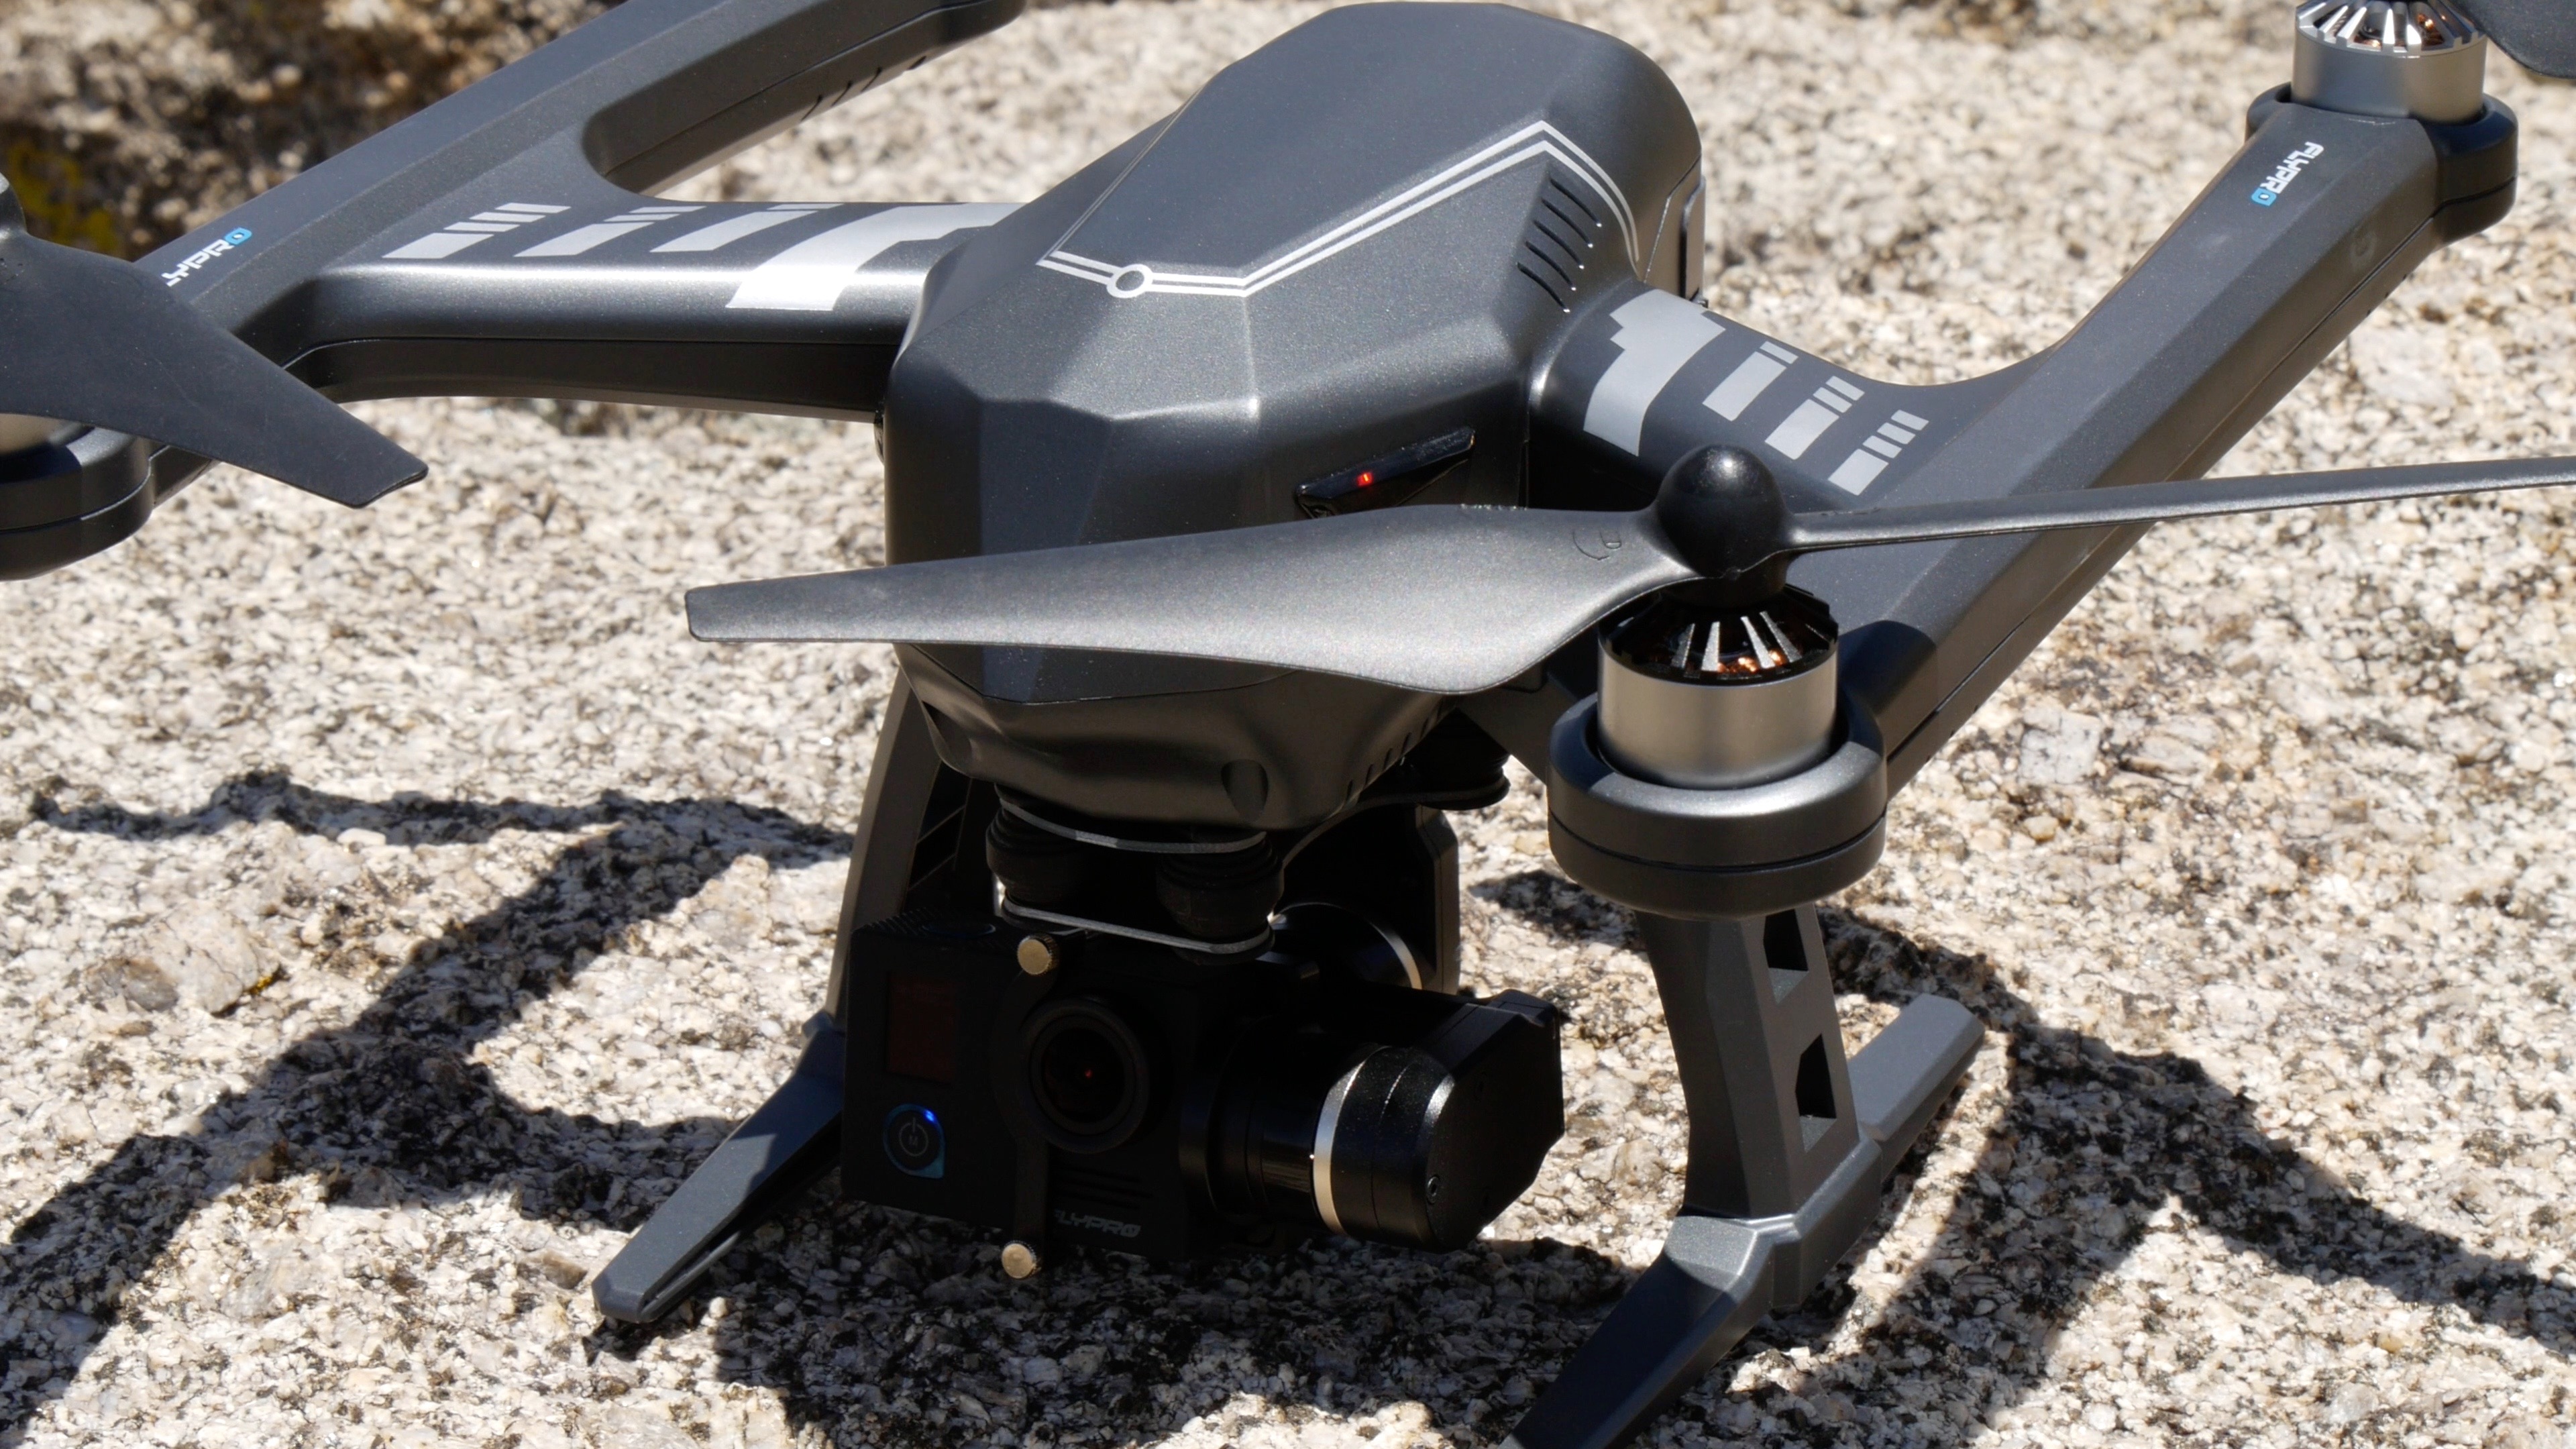 flypro xeagle drone video review xeagle05